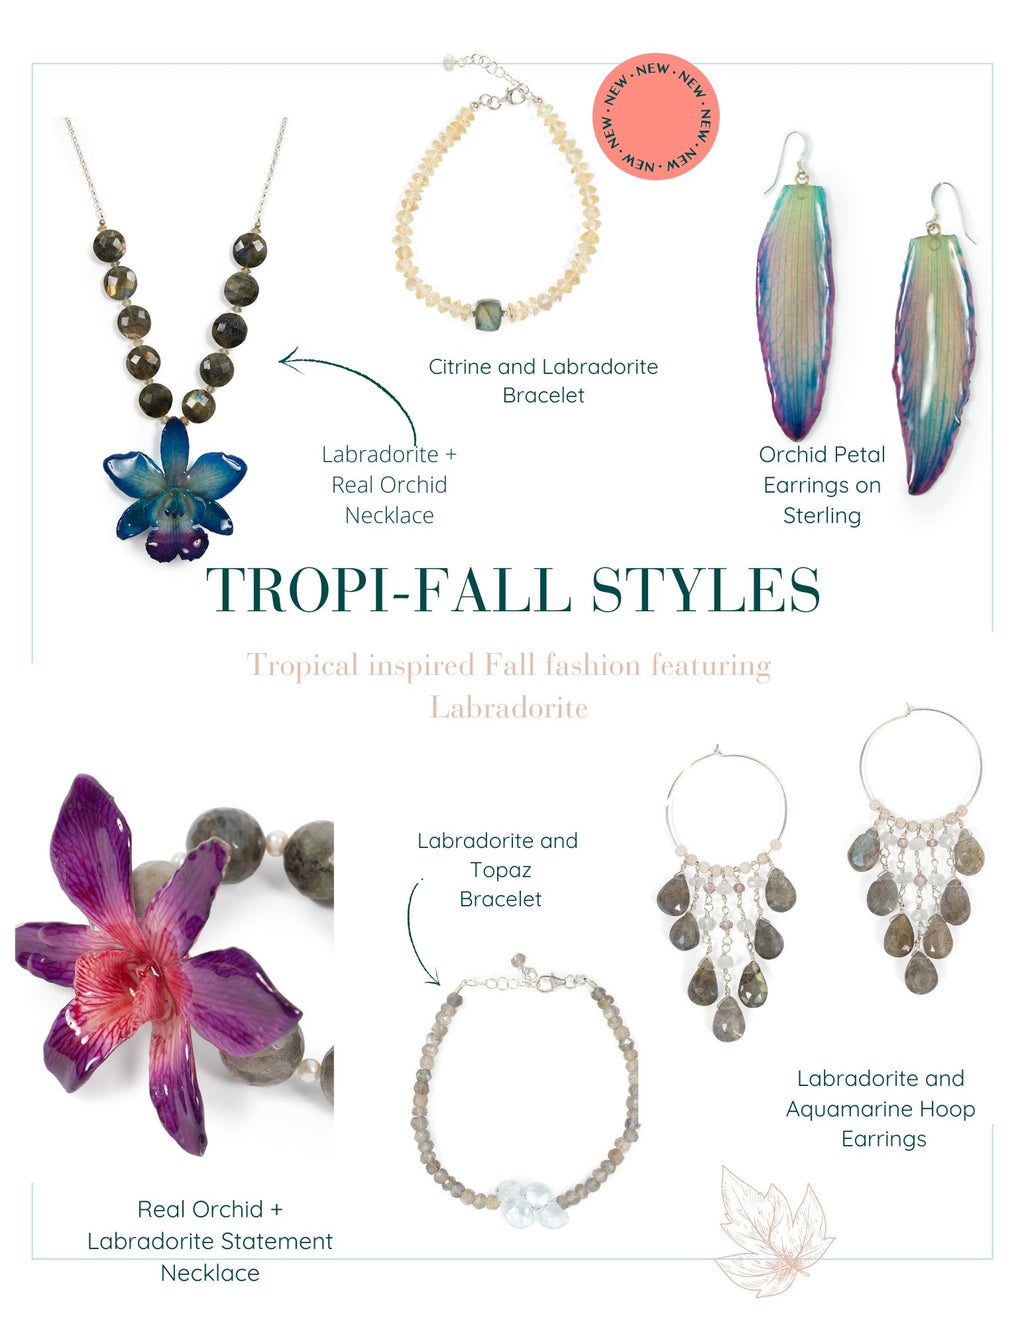 Tropi-Fall Style Guide - Devi & Co